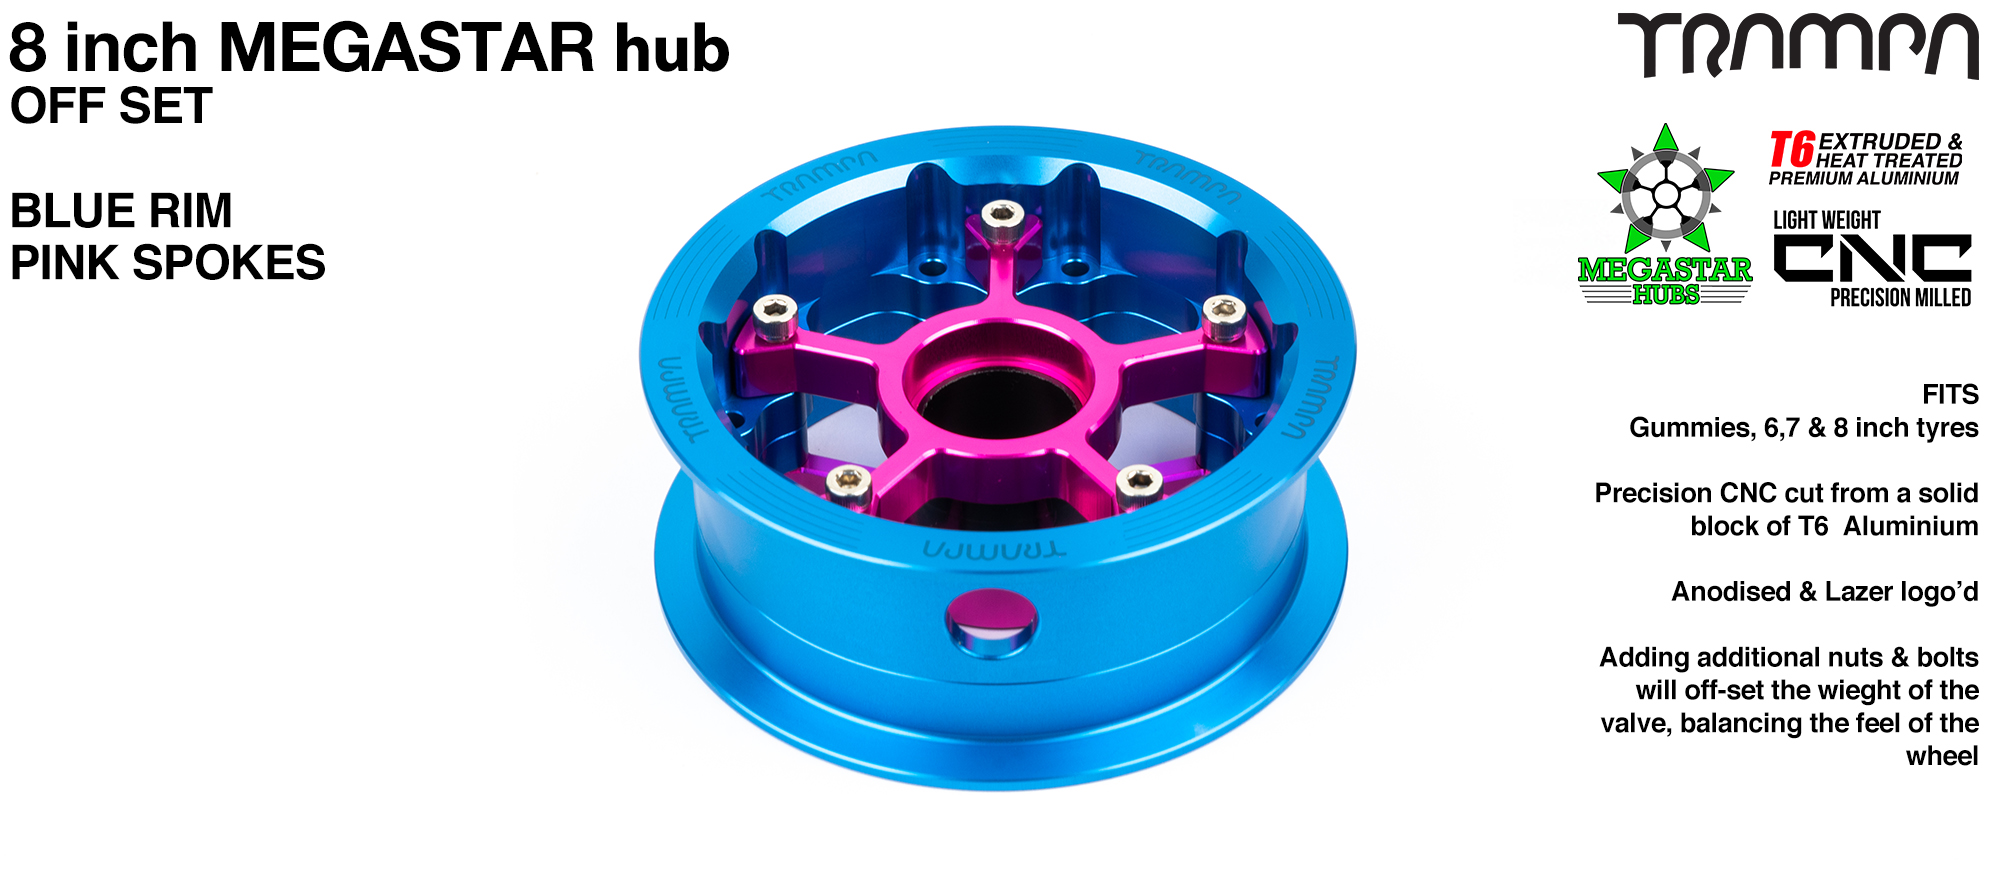 OFF-SET MEGASTAR 8 Hub 3.75 x 2 Inch - BLUE Rim with pink Spokes 